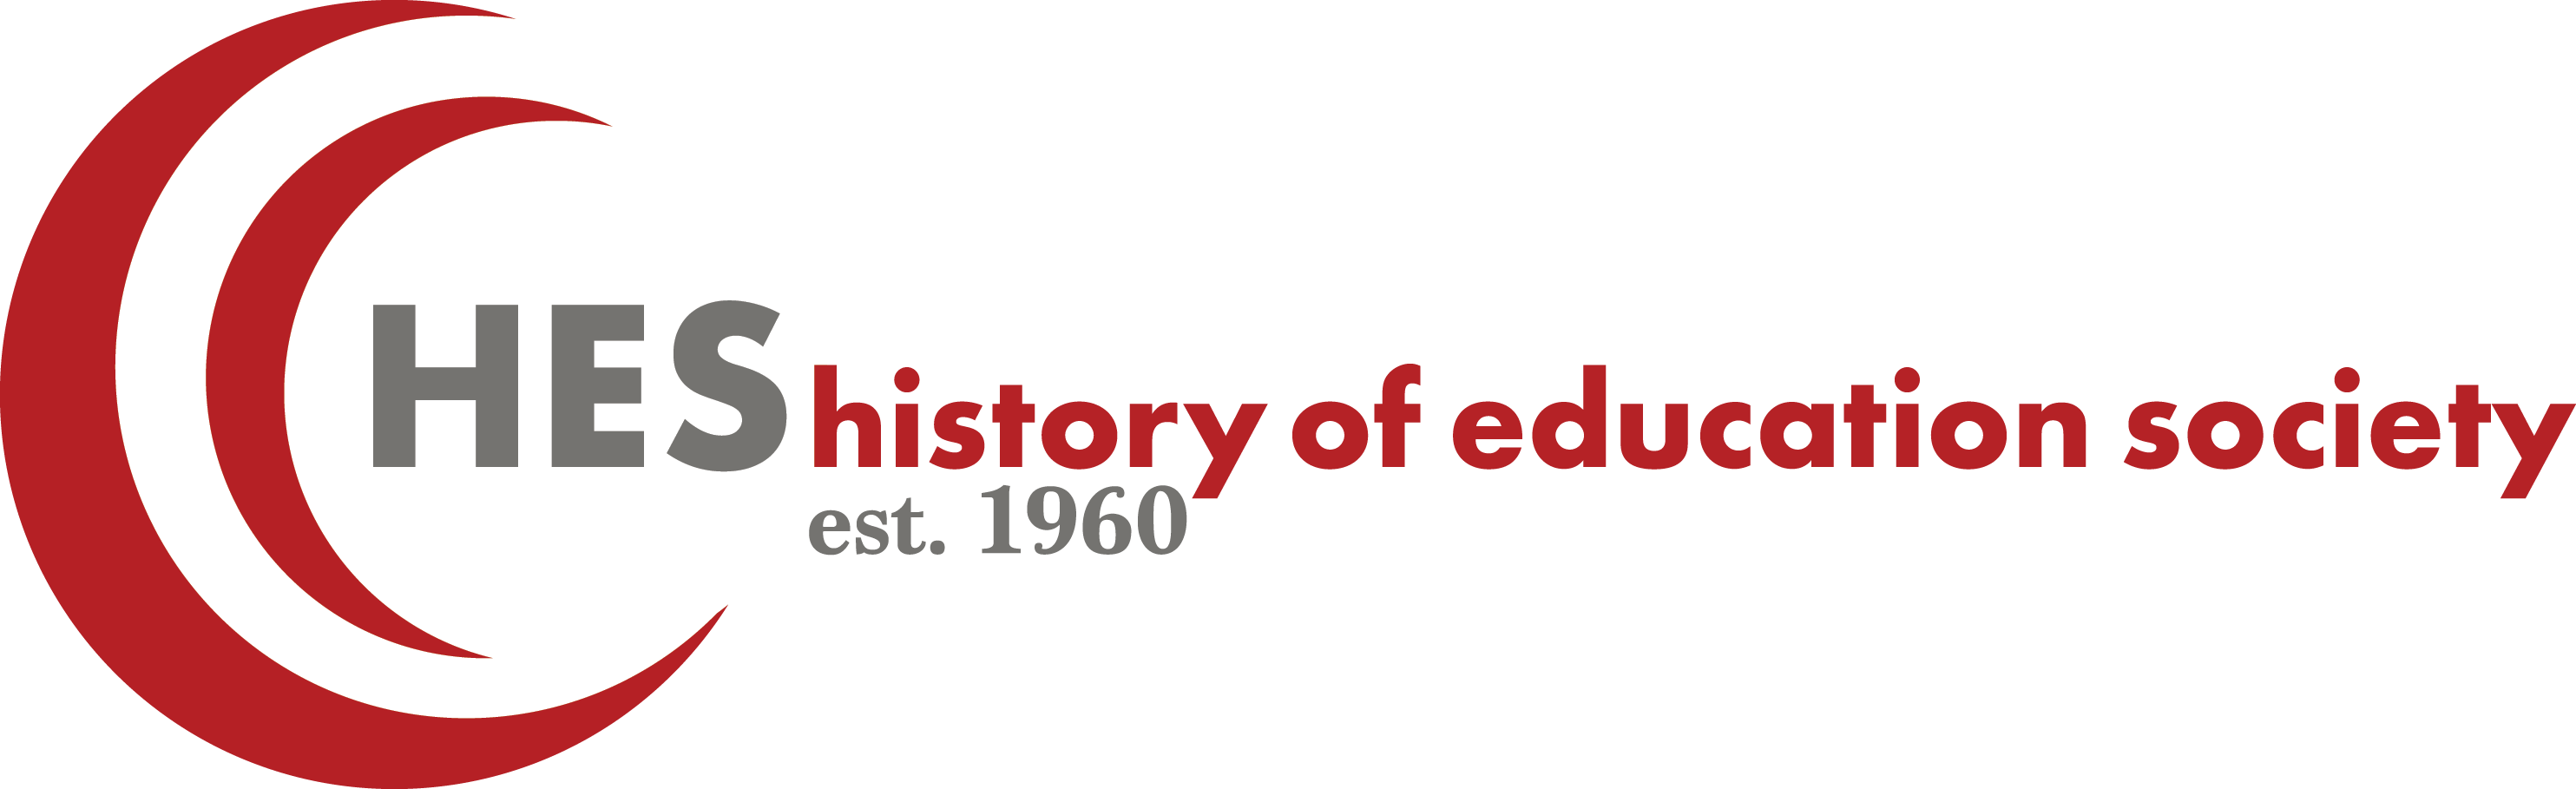 HEDS logo 2020